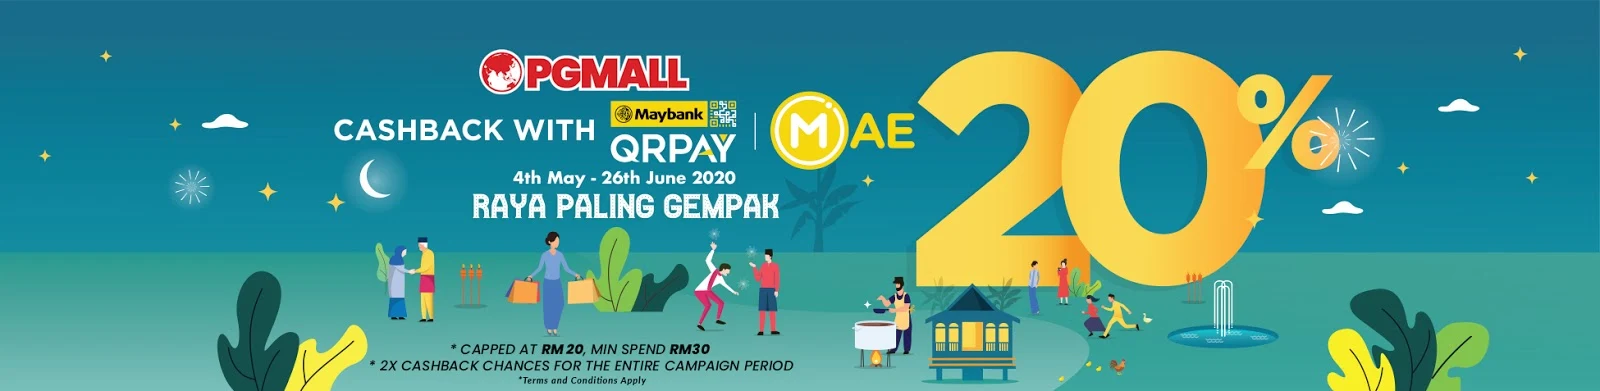 pg mall maybank qrpay cashback